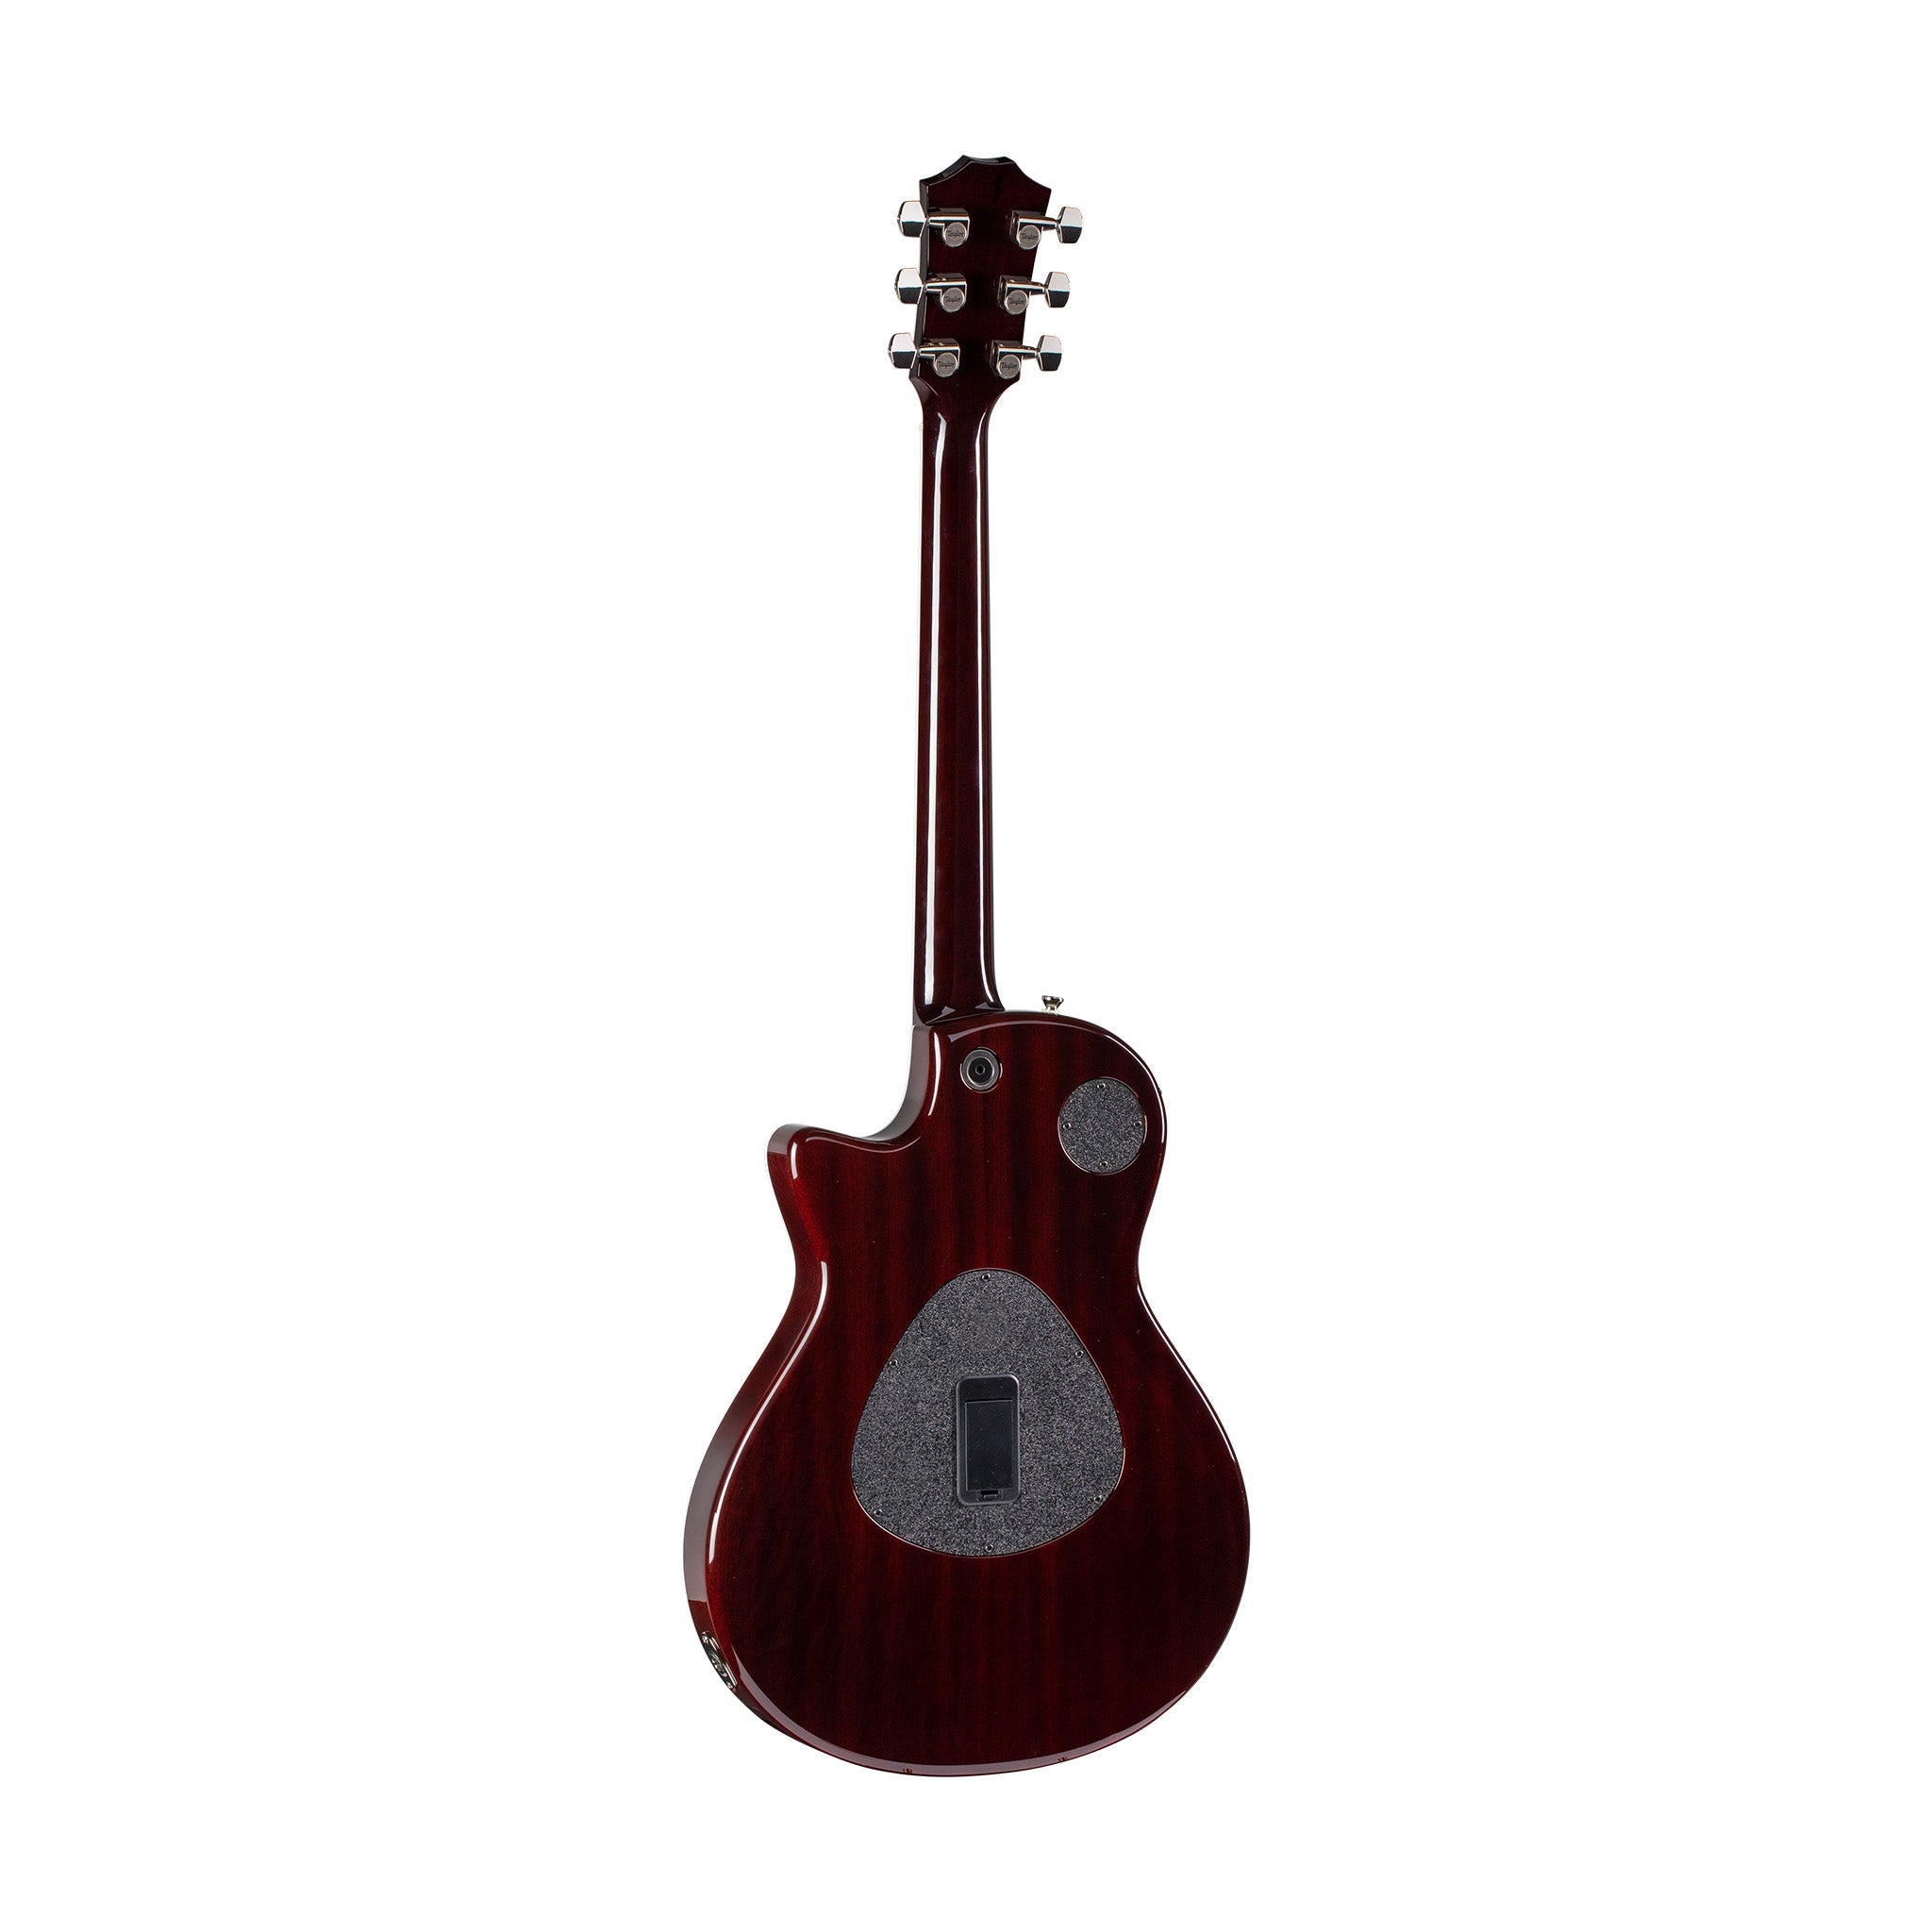 Taylor Special Edition T5z Pro Electric Guitar w/Case, Molasses Burst w/Quilt Maple